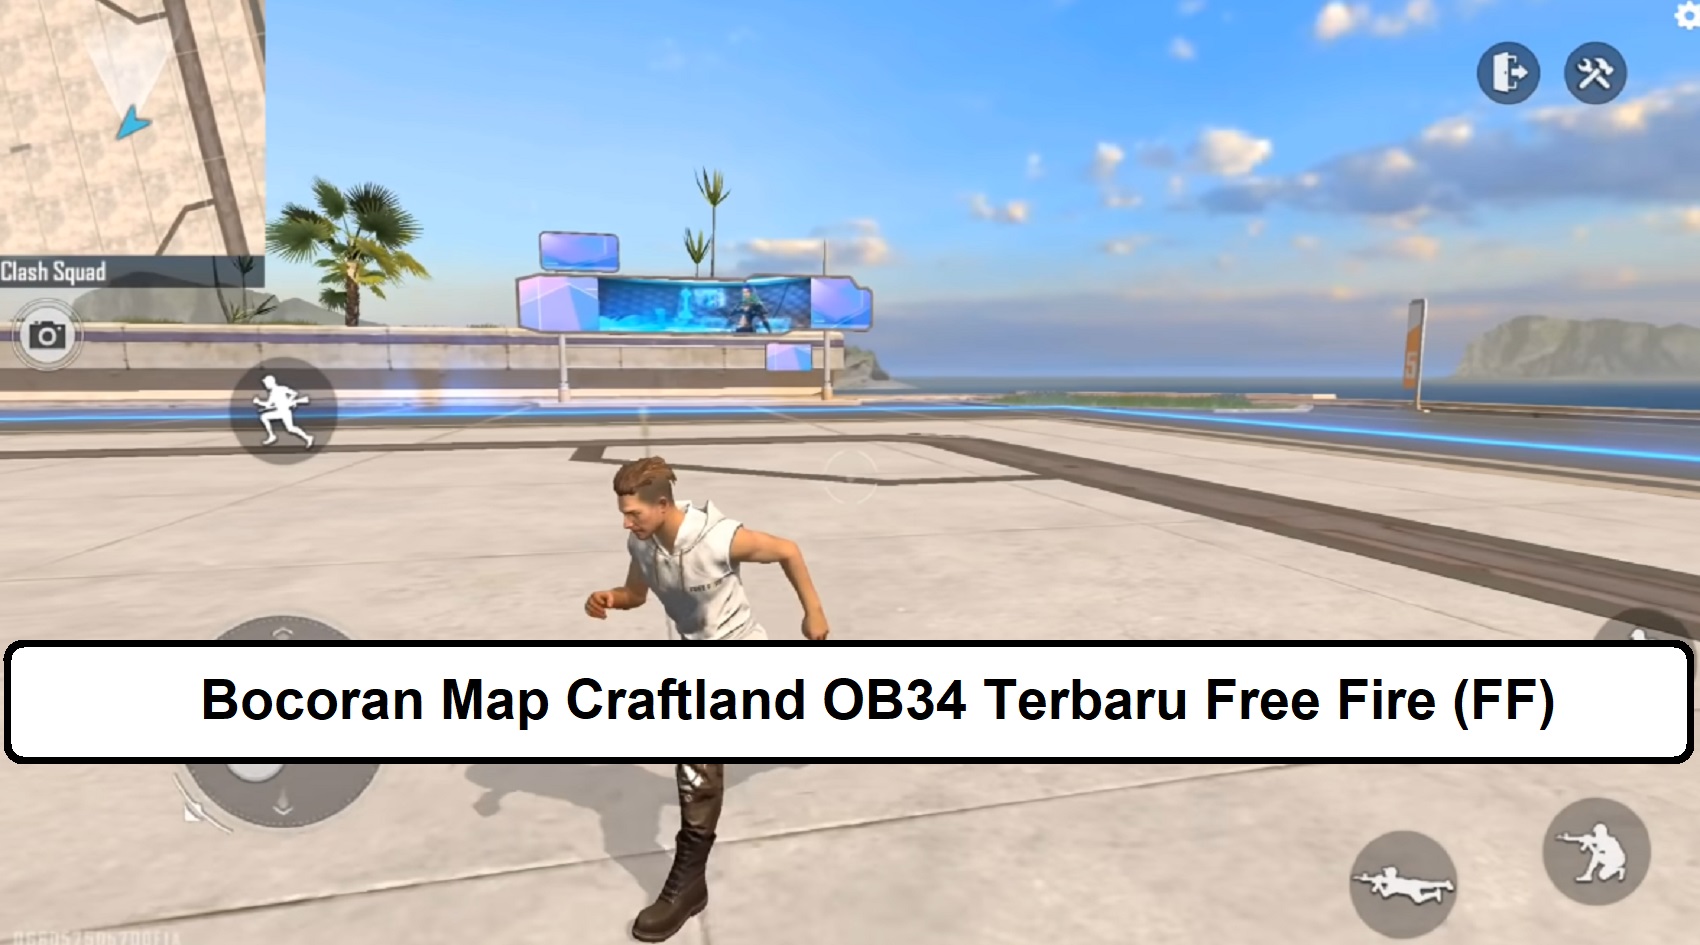 Bocoran Map Craftland OB34 Terbaru Free Fire (FF)